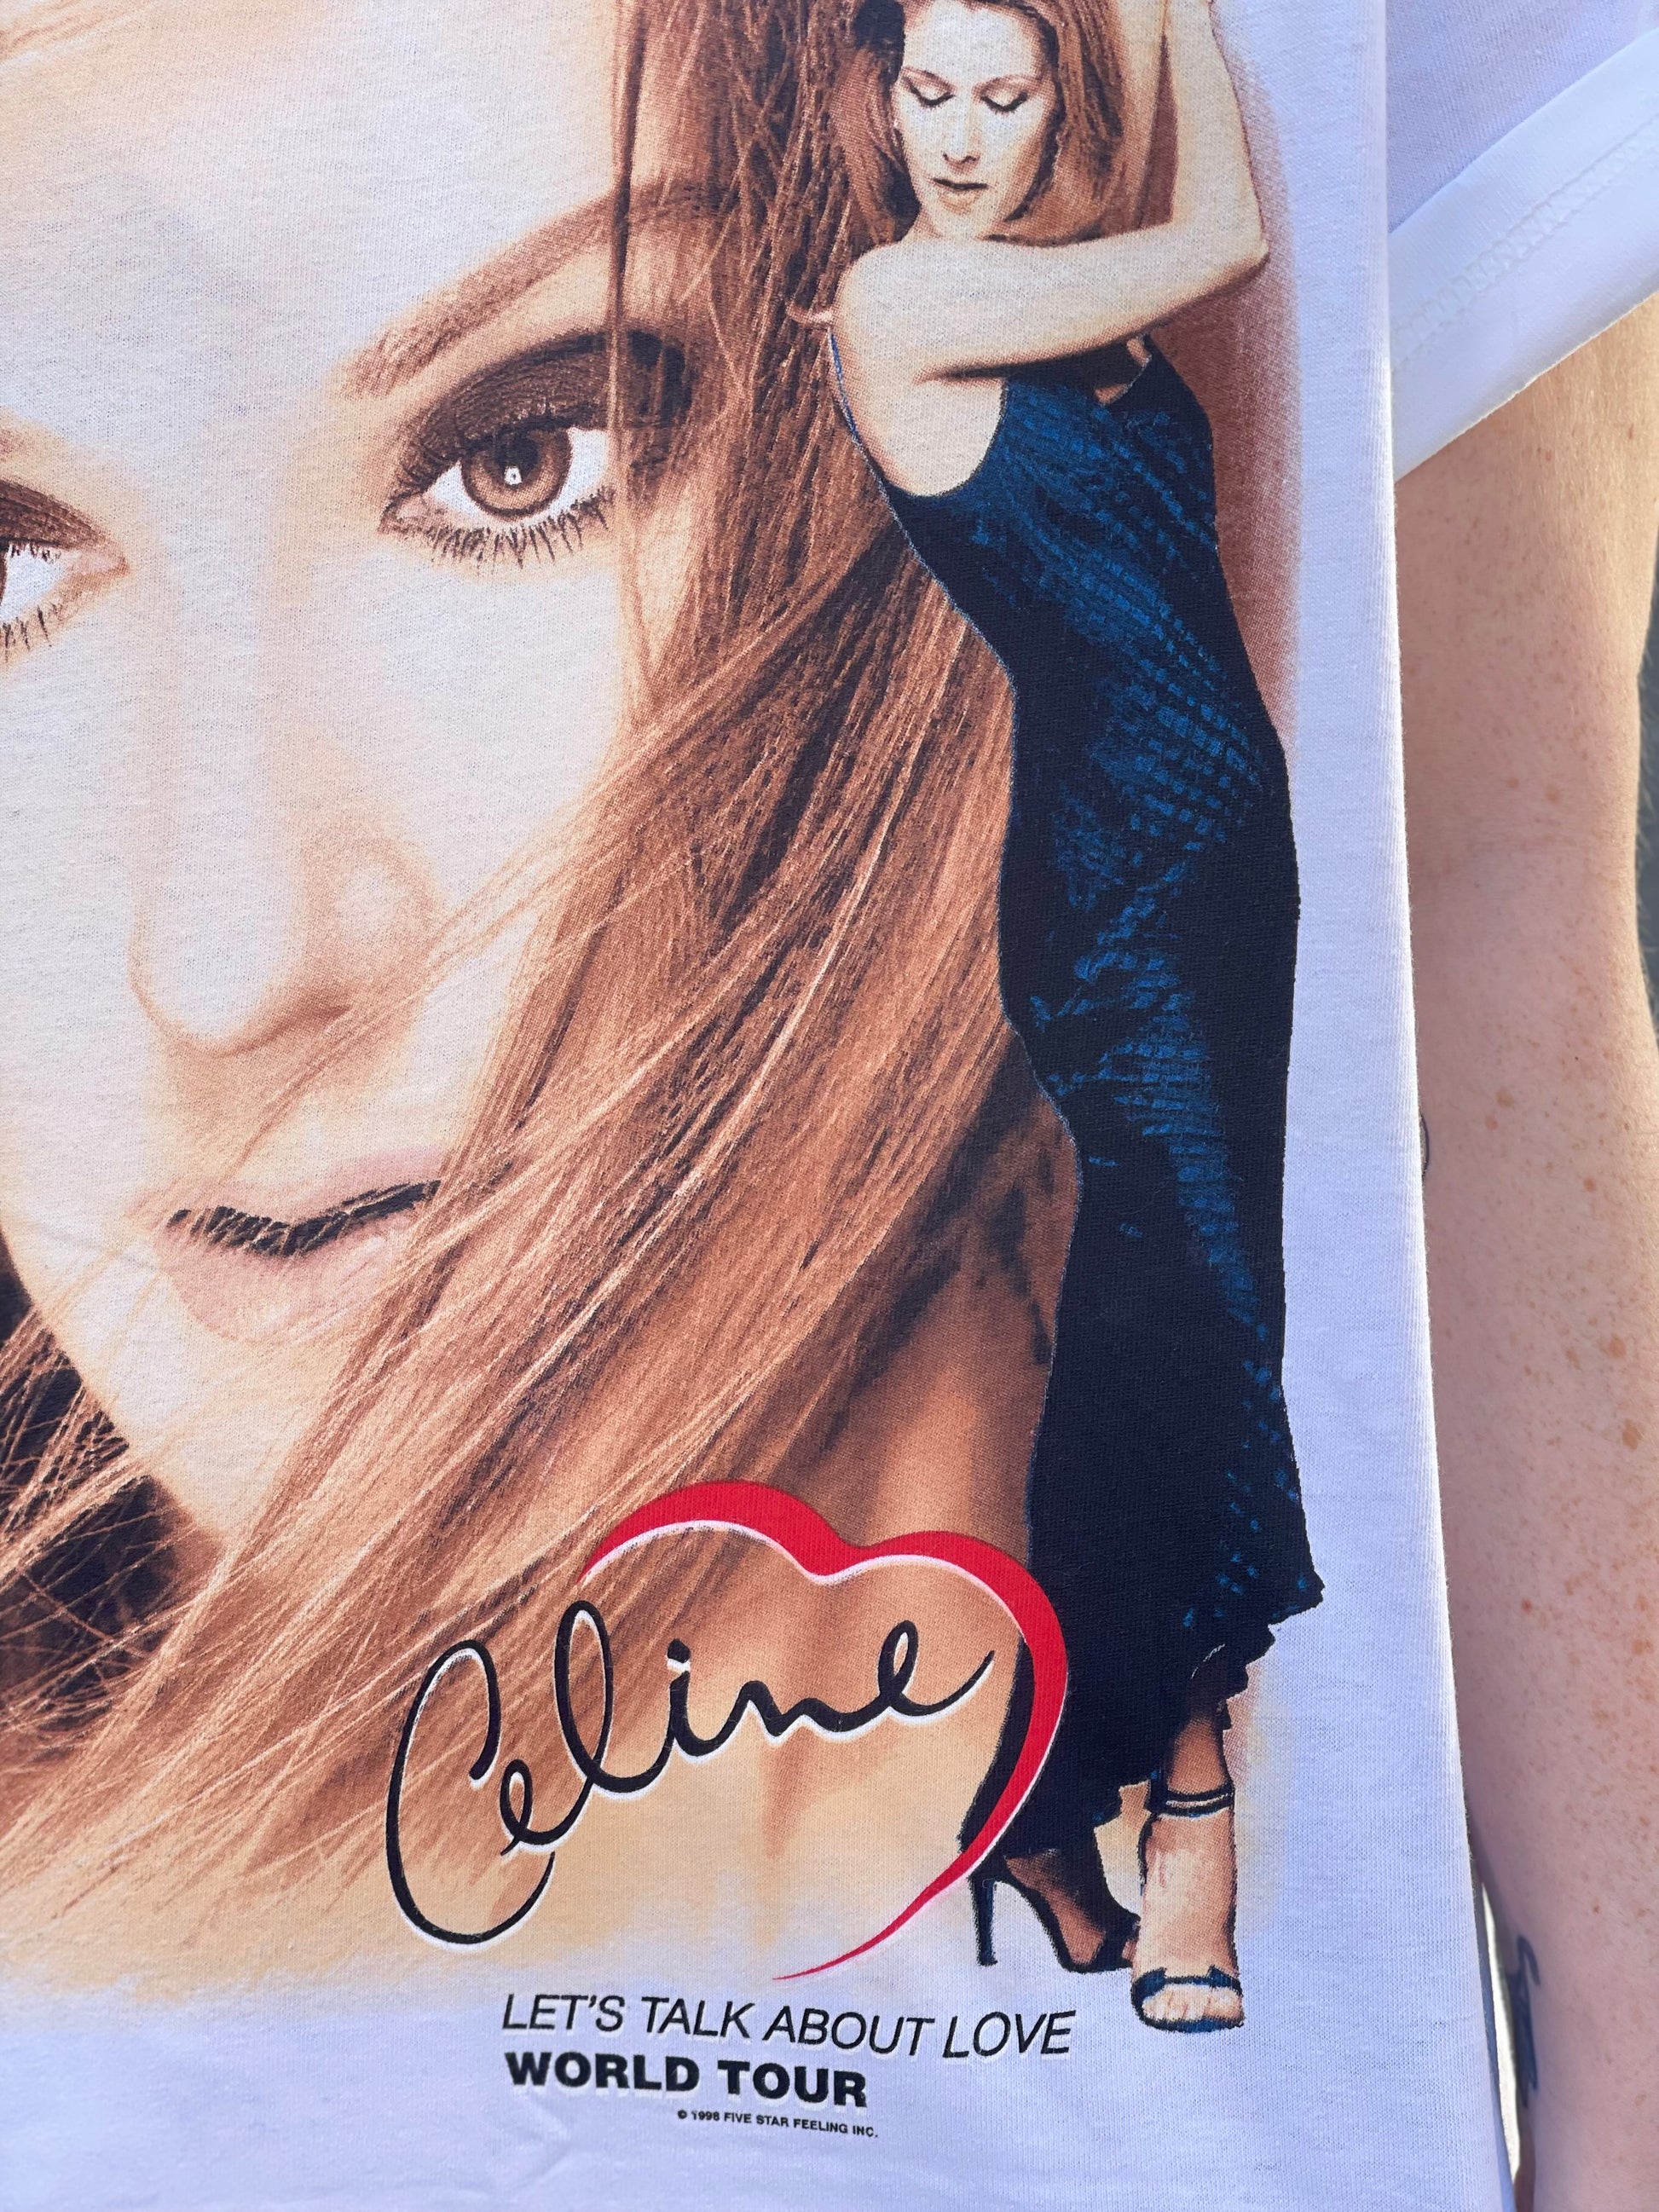 Vintage 1998 Celine Dion T-shirt - Spark Pretty